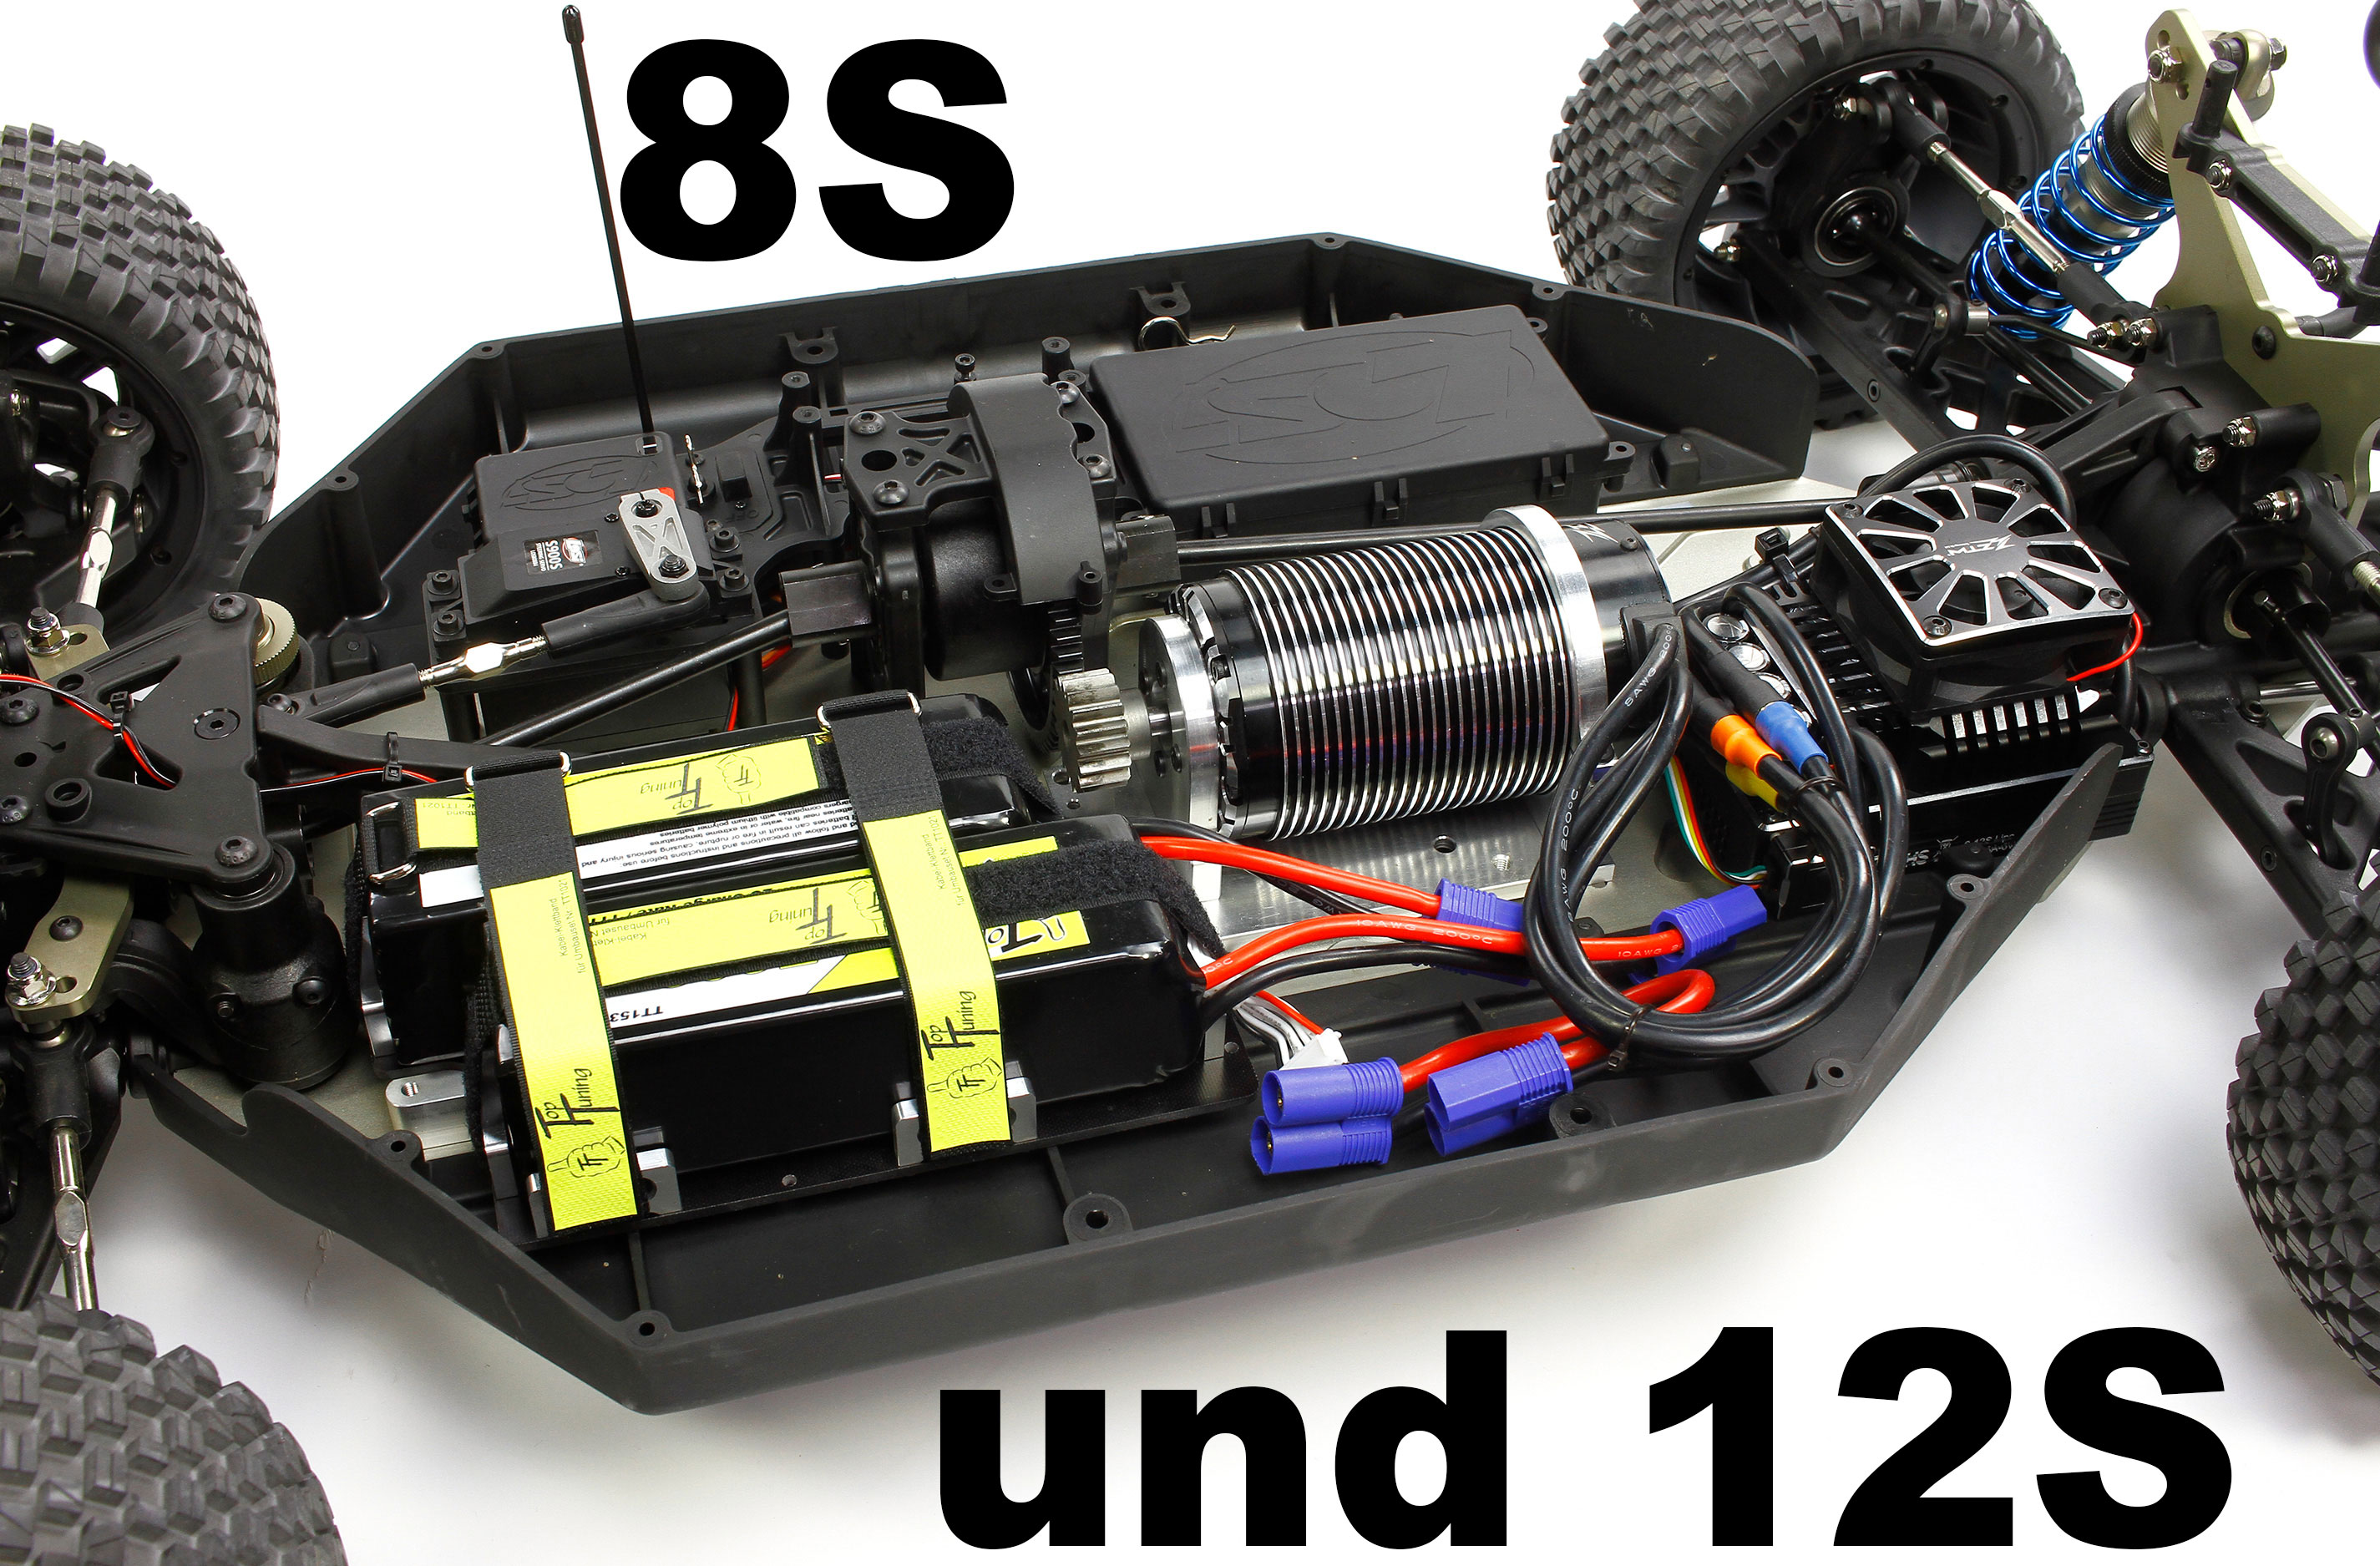 TT1023 Top Tuning Elektro Umrüstsatz inkl. Motor und Regler für Losi 5ive-T 2.0